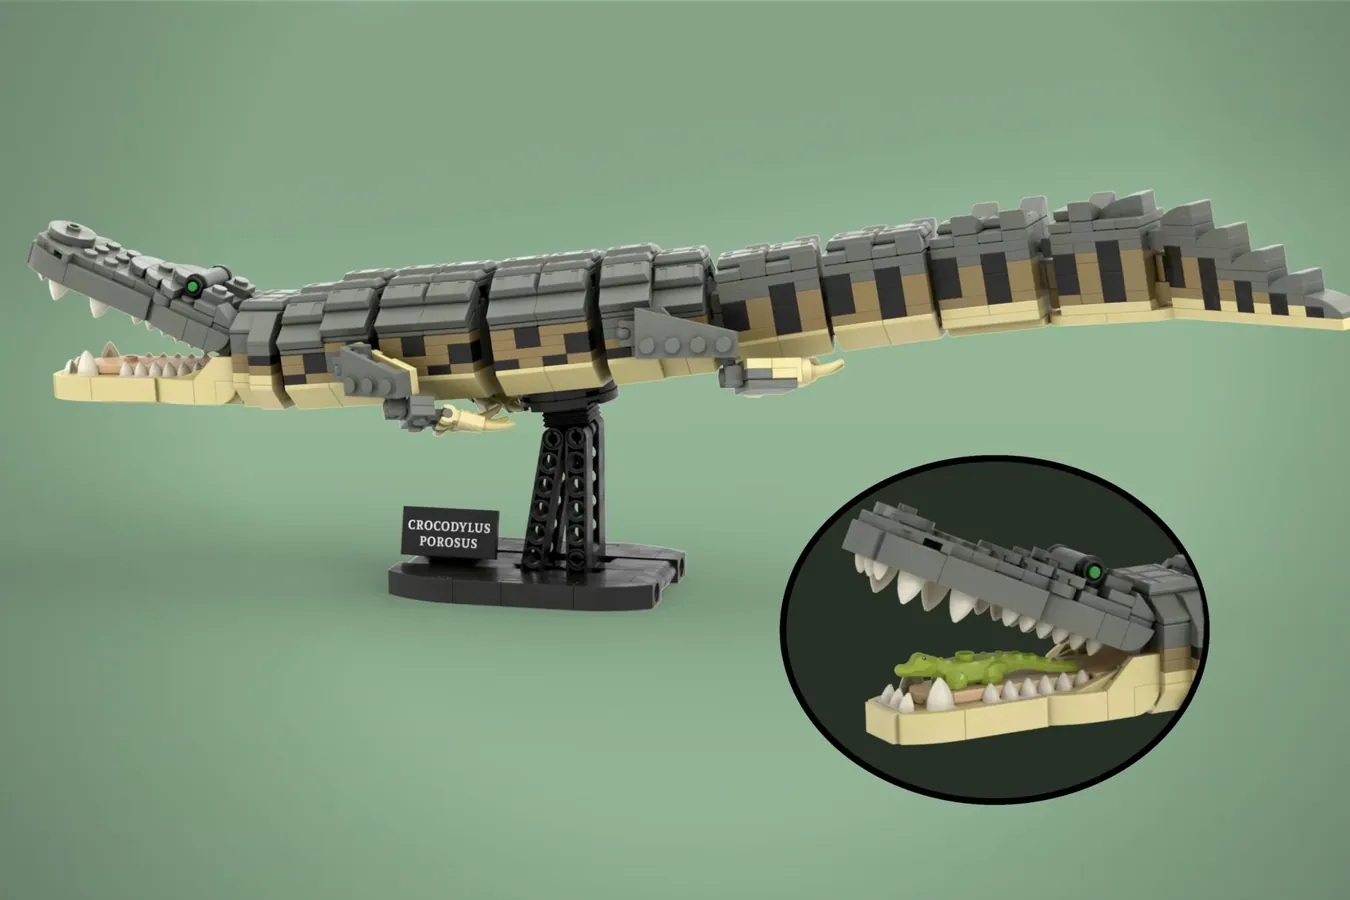 LEGO Ideas Steve Irwin & Majestic Crocodile project